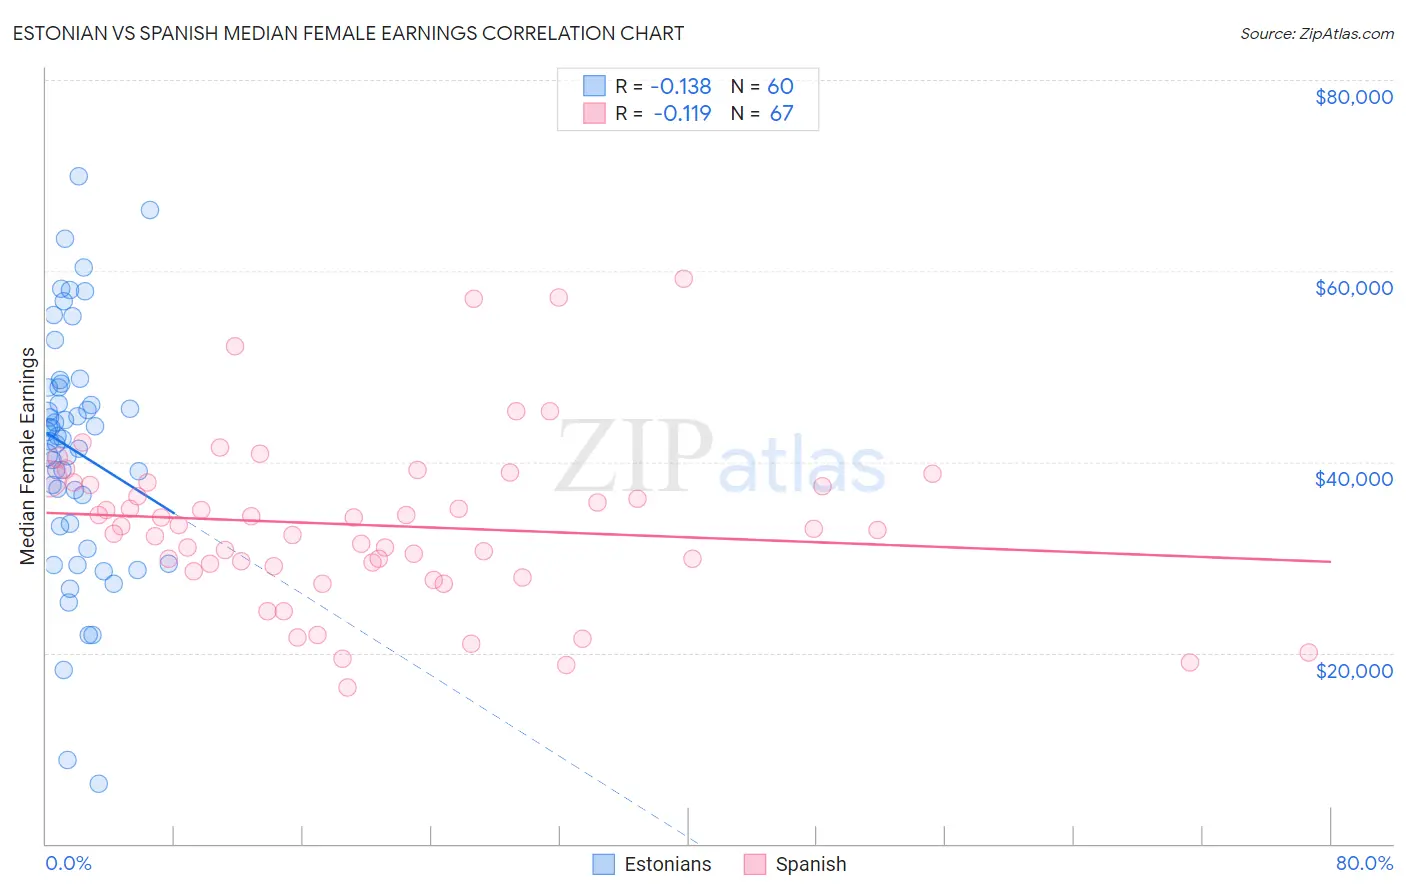 Estonian vs Spanish Median Female Earnings